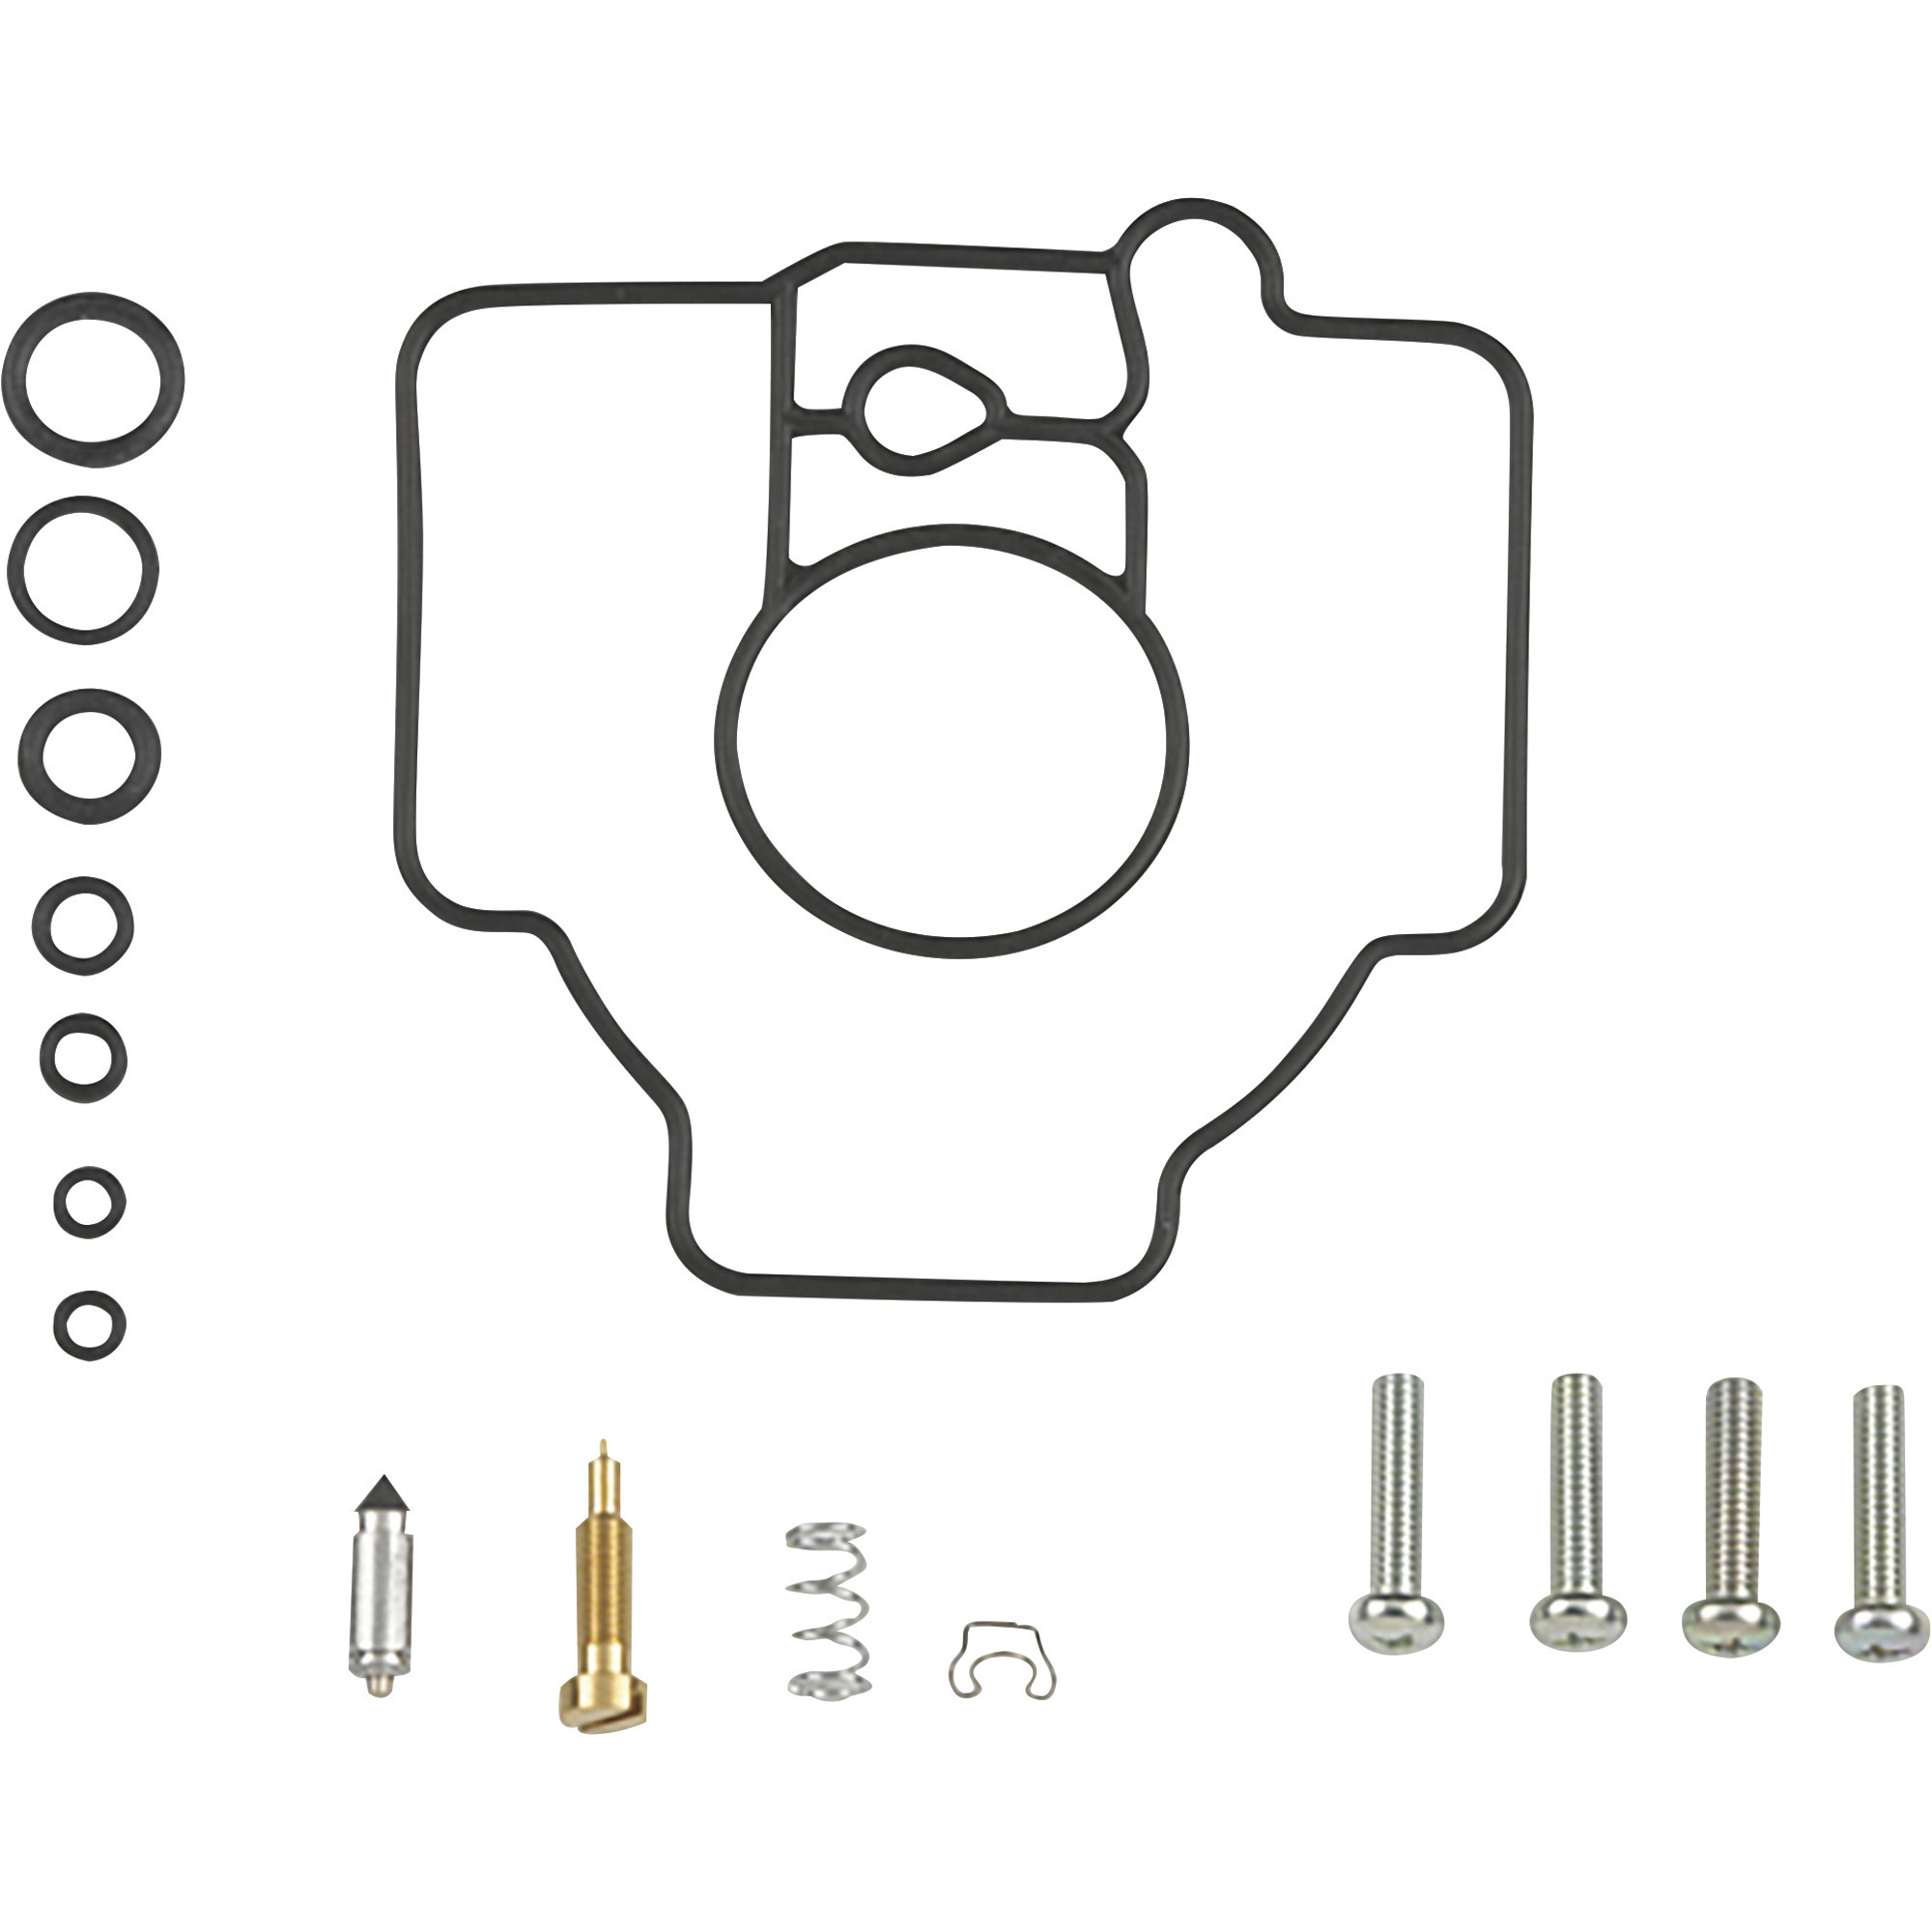 Kohler Carburetor Repair Kit — OEM Replacement Part# 2475703 -  Kohler Engines, 24 757 03-S